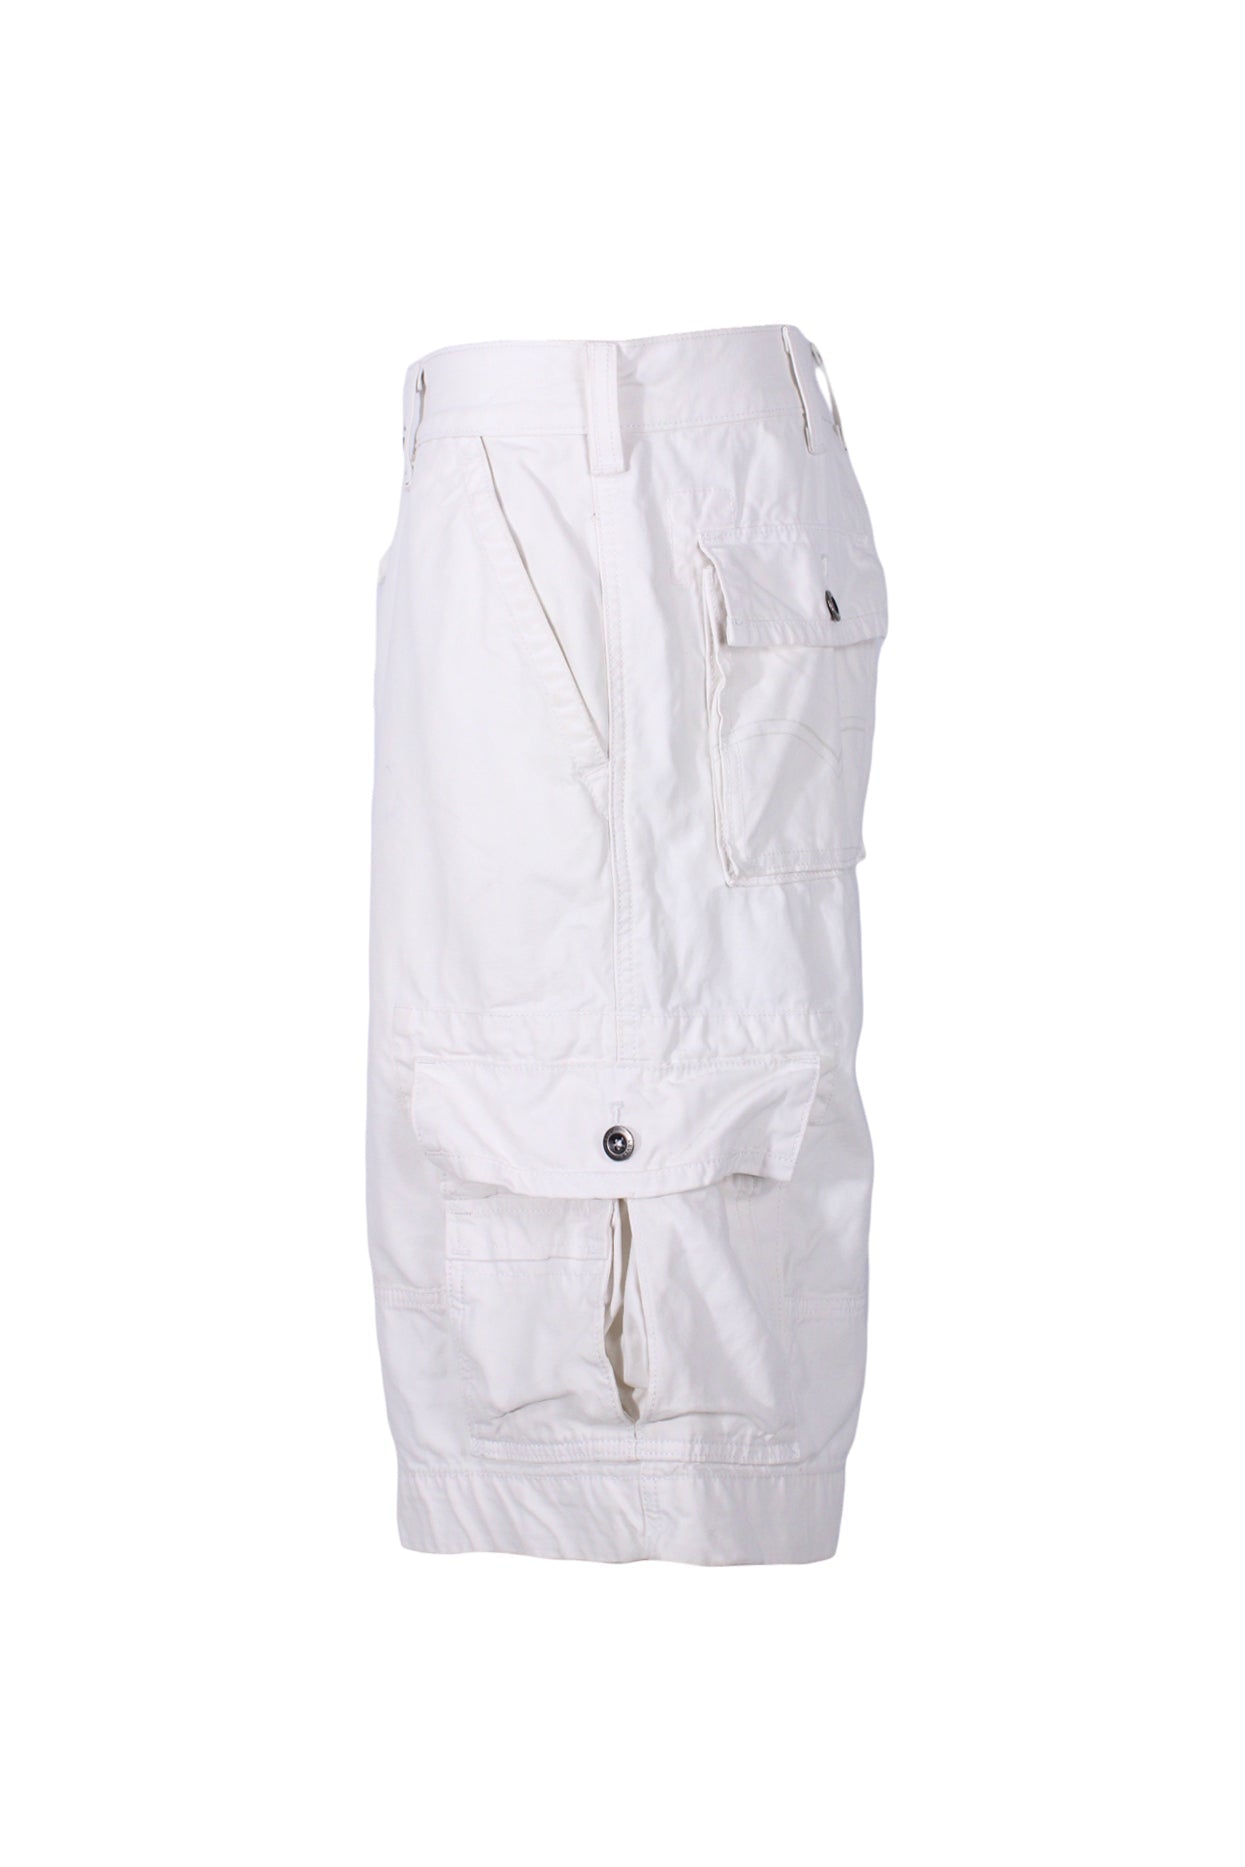 side angle levi's off-white cargo shorts featuring front slash pocket, side utility pocket, and rear flap pocket.